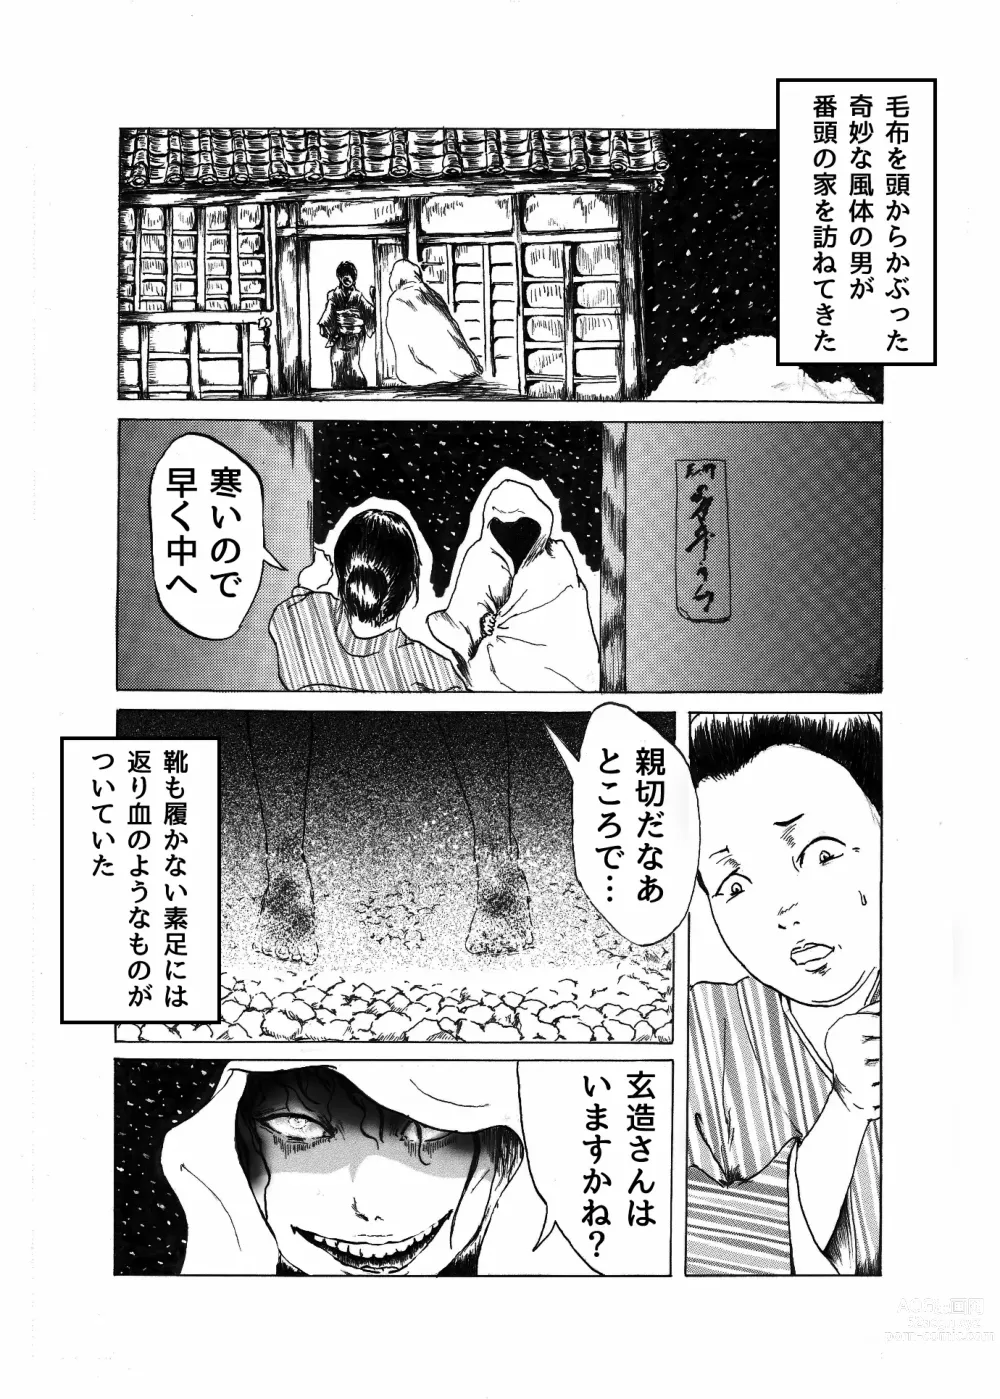 Page 3 of doujinshi Kai Oni